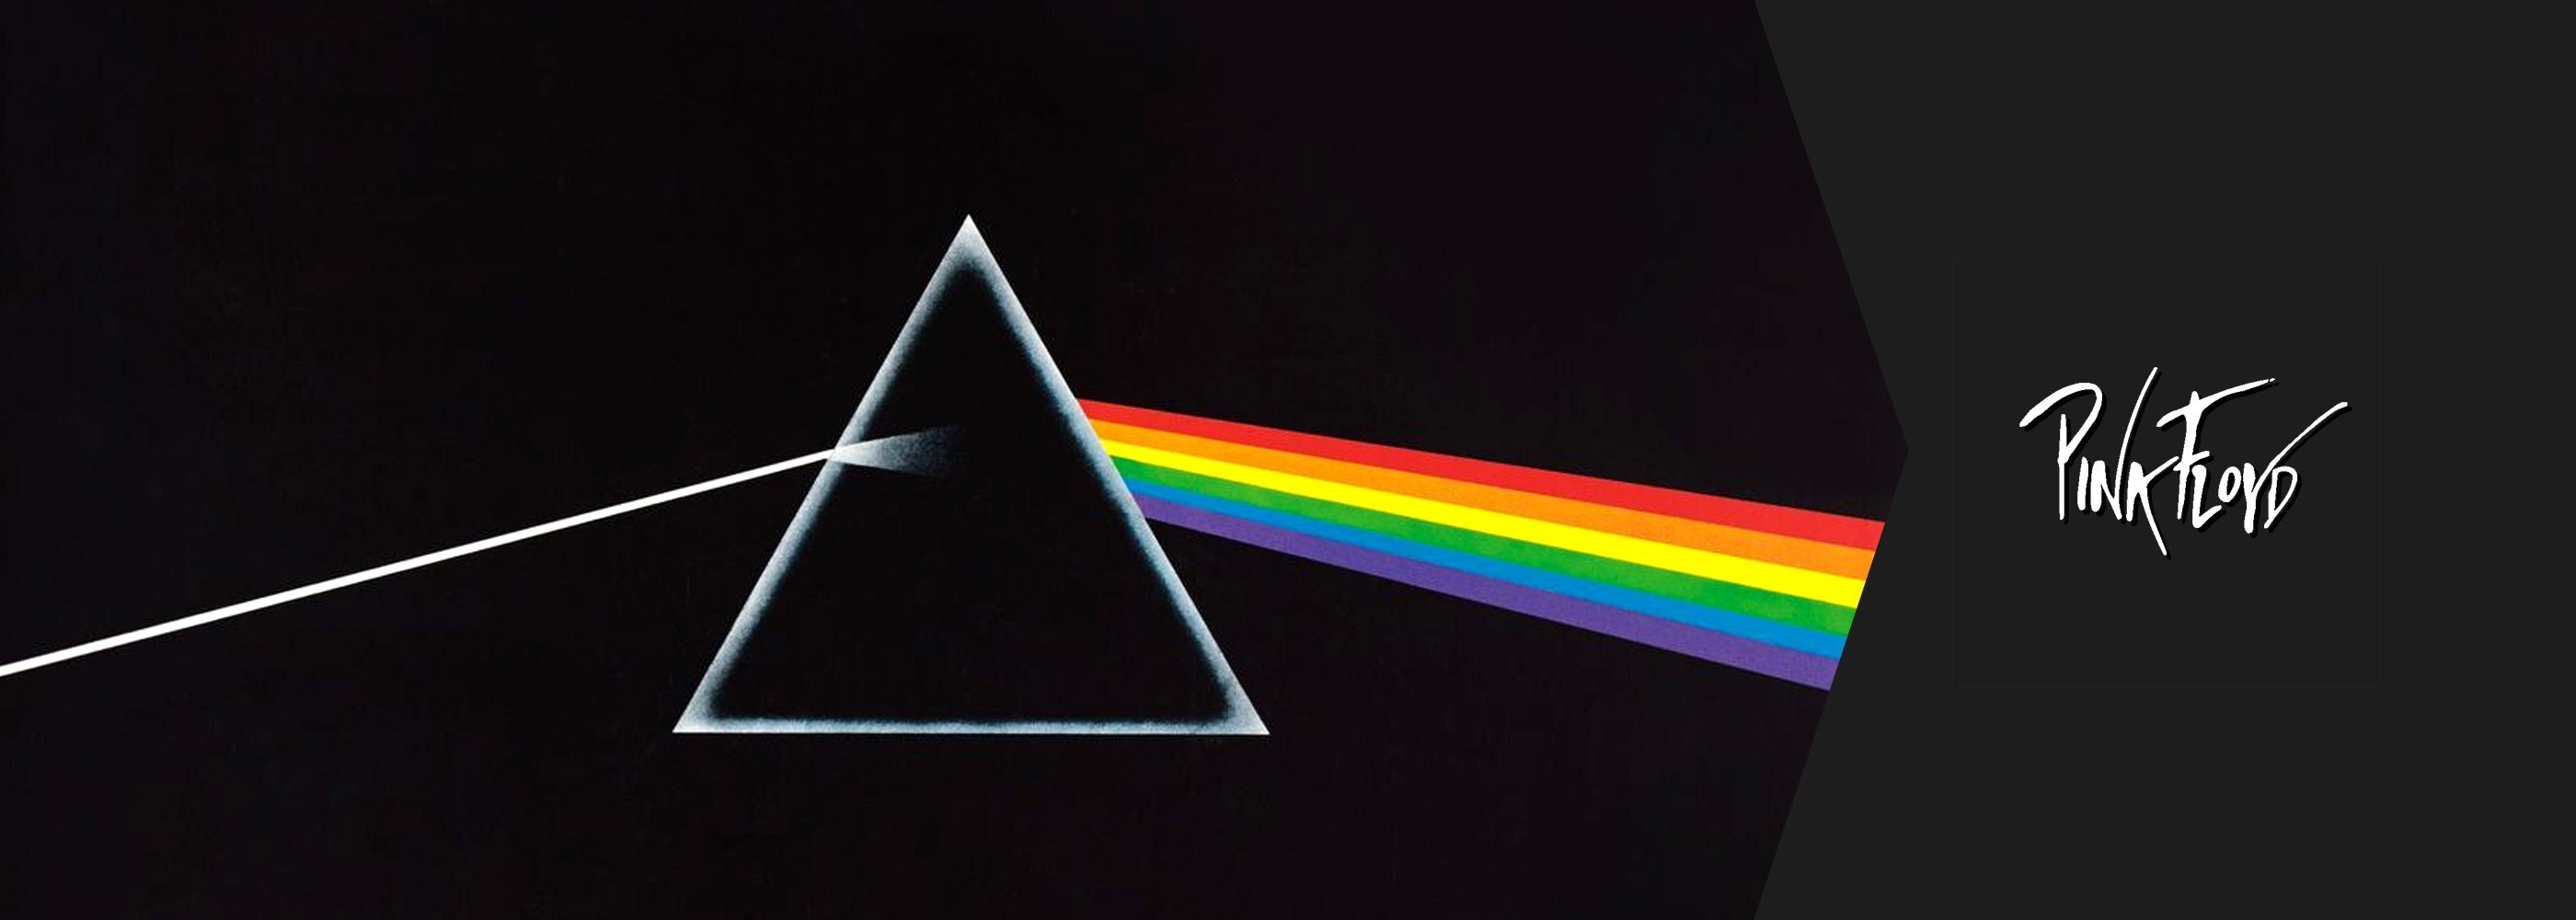 Pink Floyd - Header